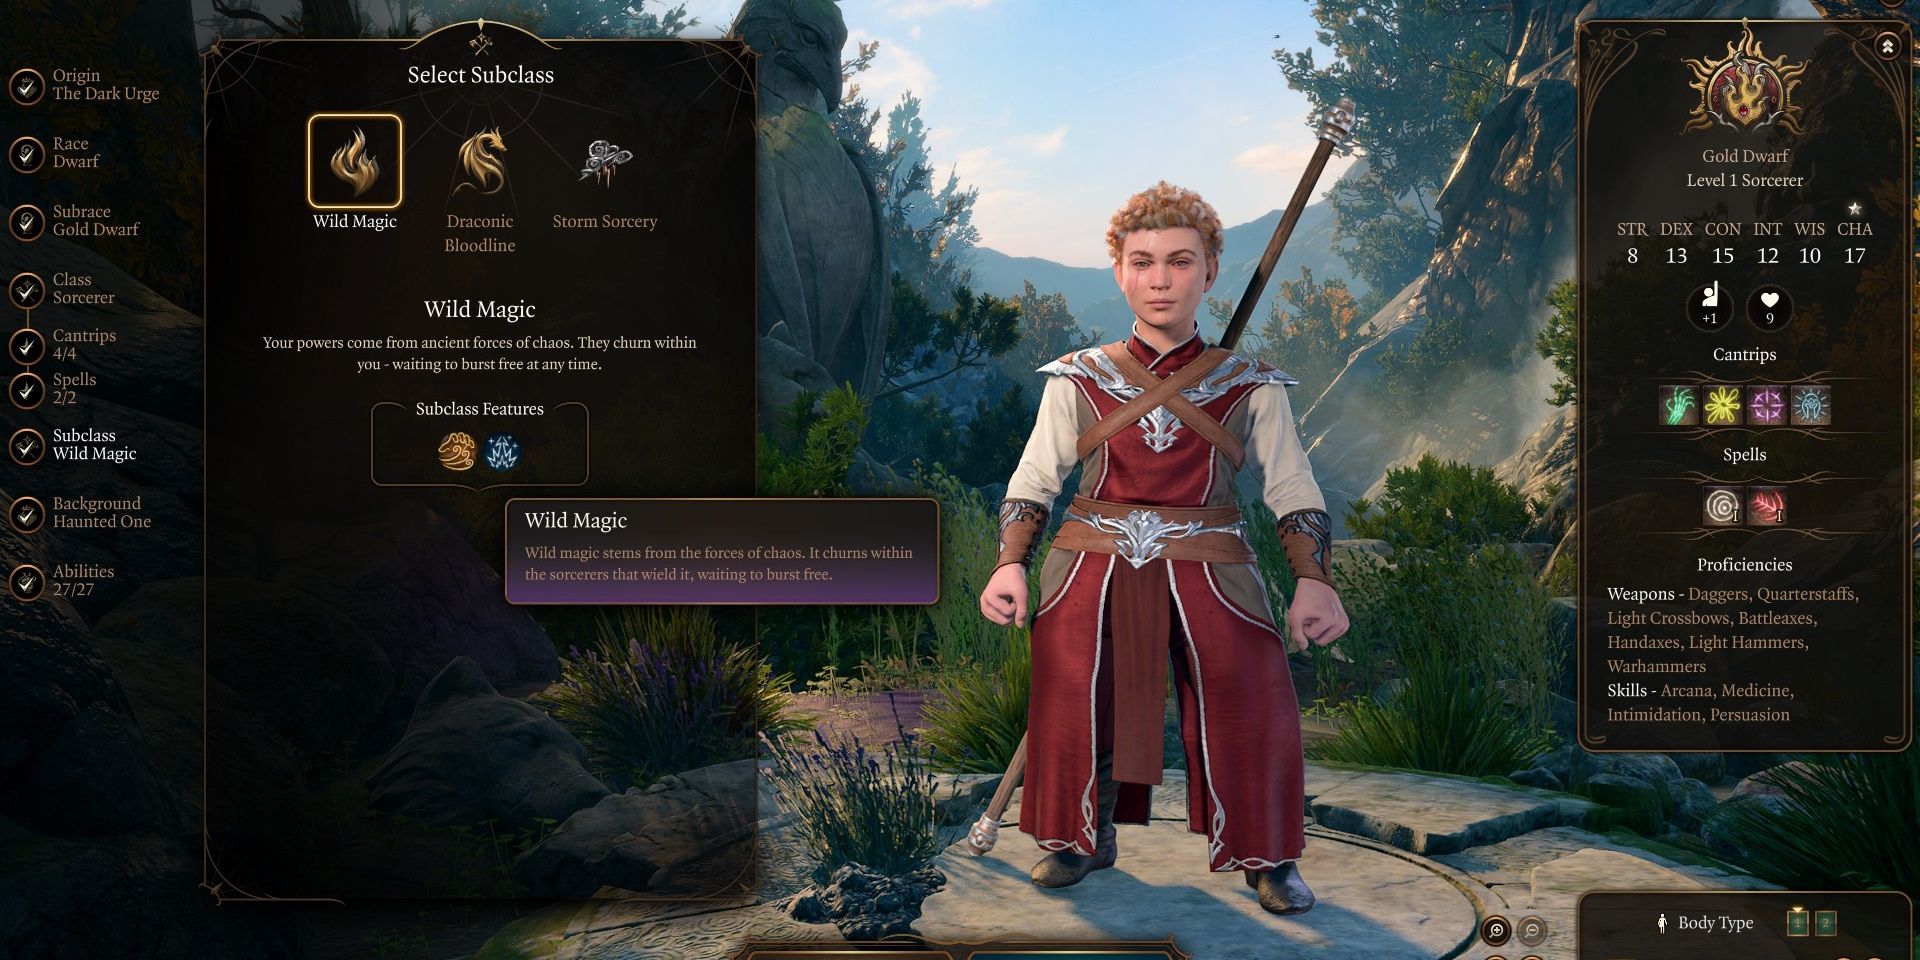 Character creation screen showing a gold dwarf wild magic sorcerer in Baldur's Gate 3